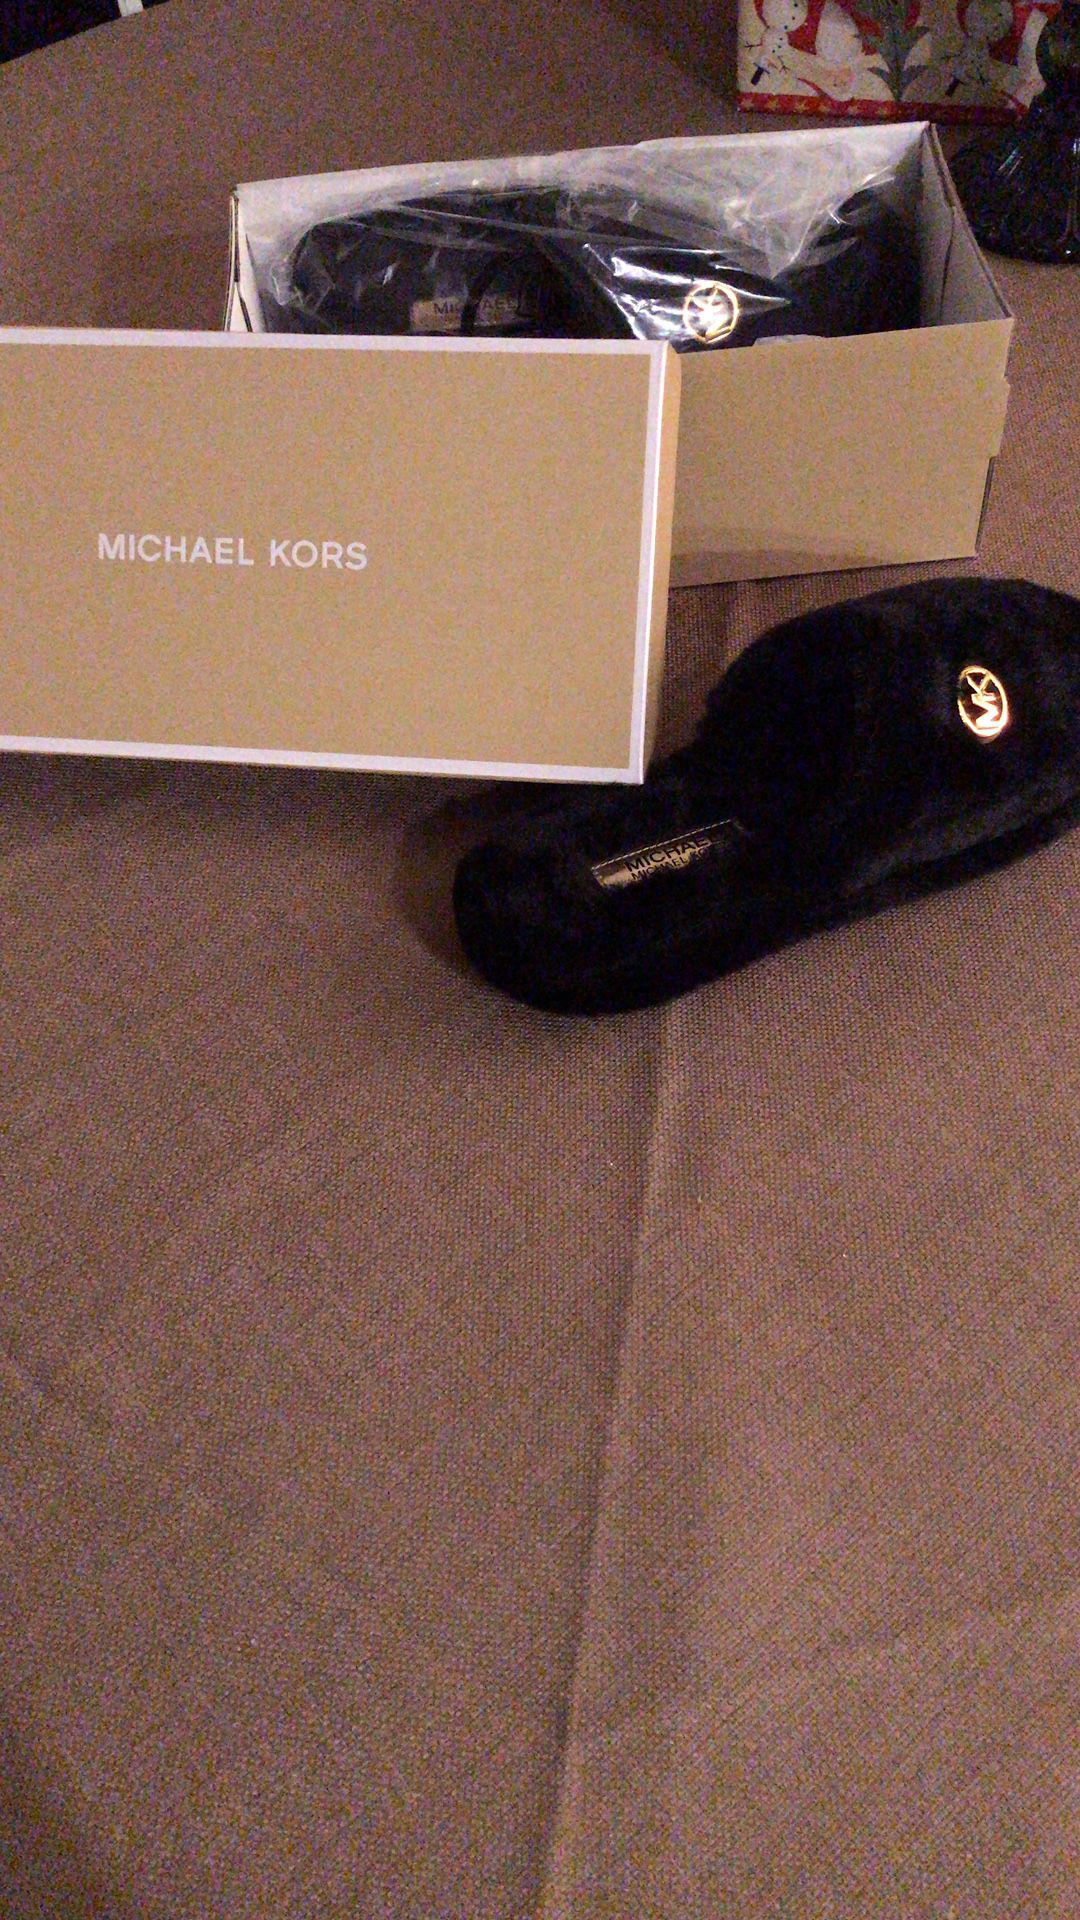 Brand new Michael kors fuzzy slippers size 8